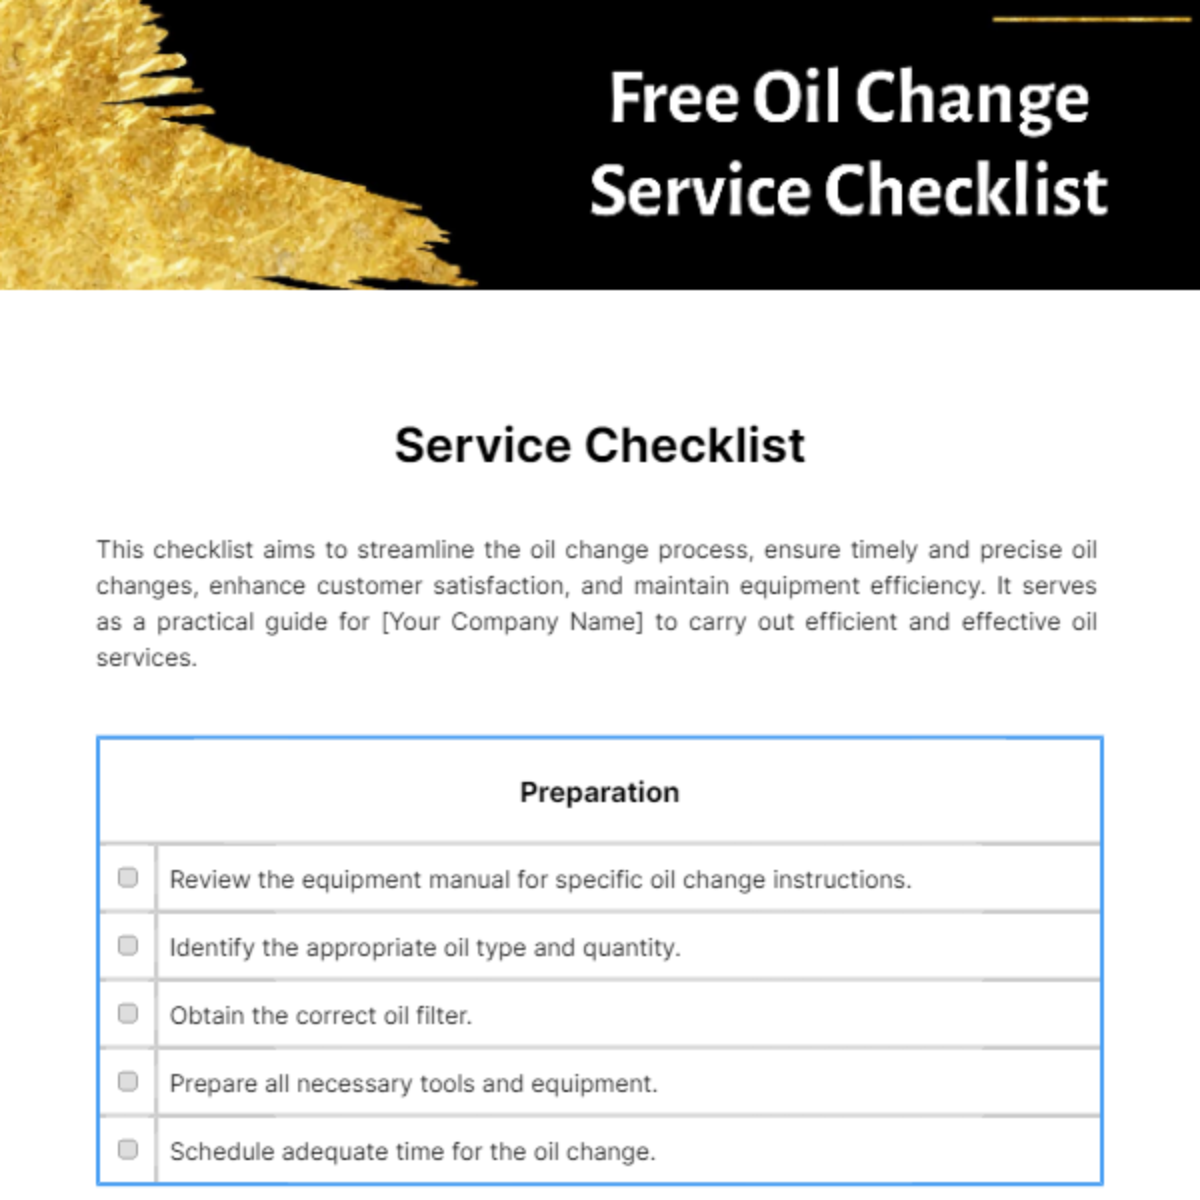 Oil Change Service Checklist Template